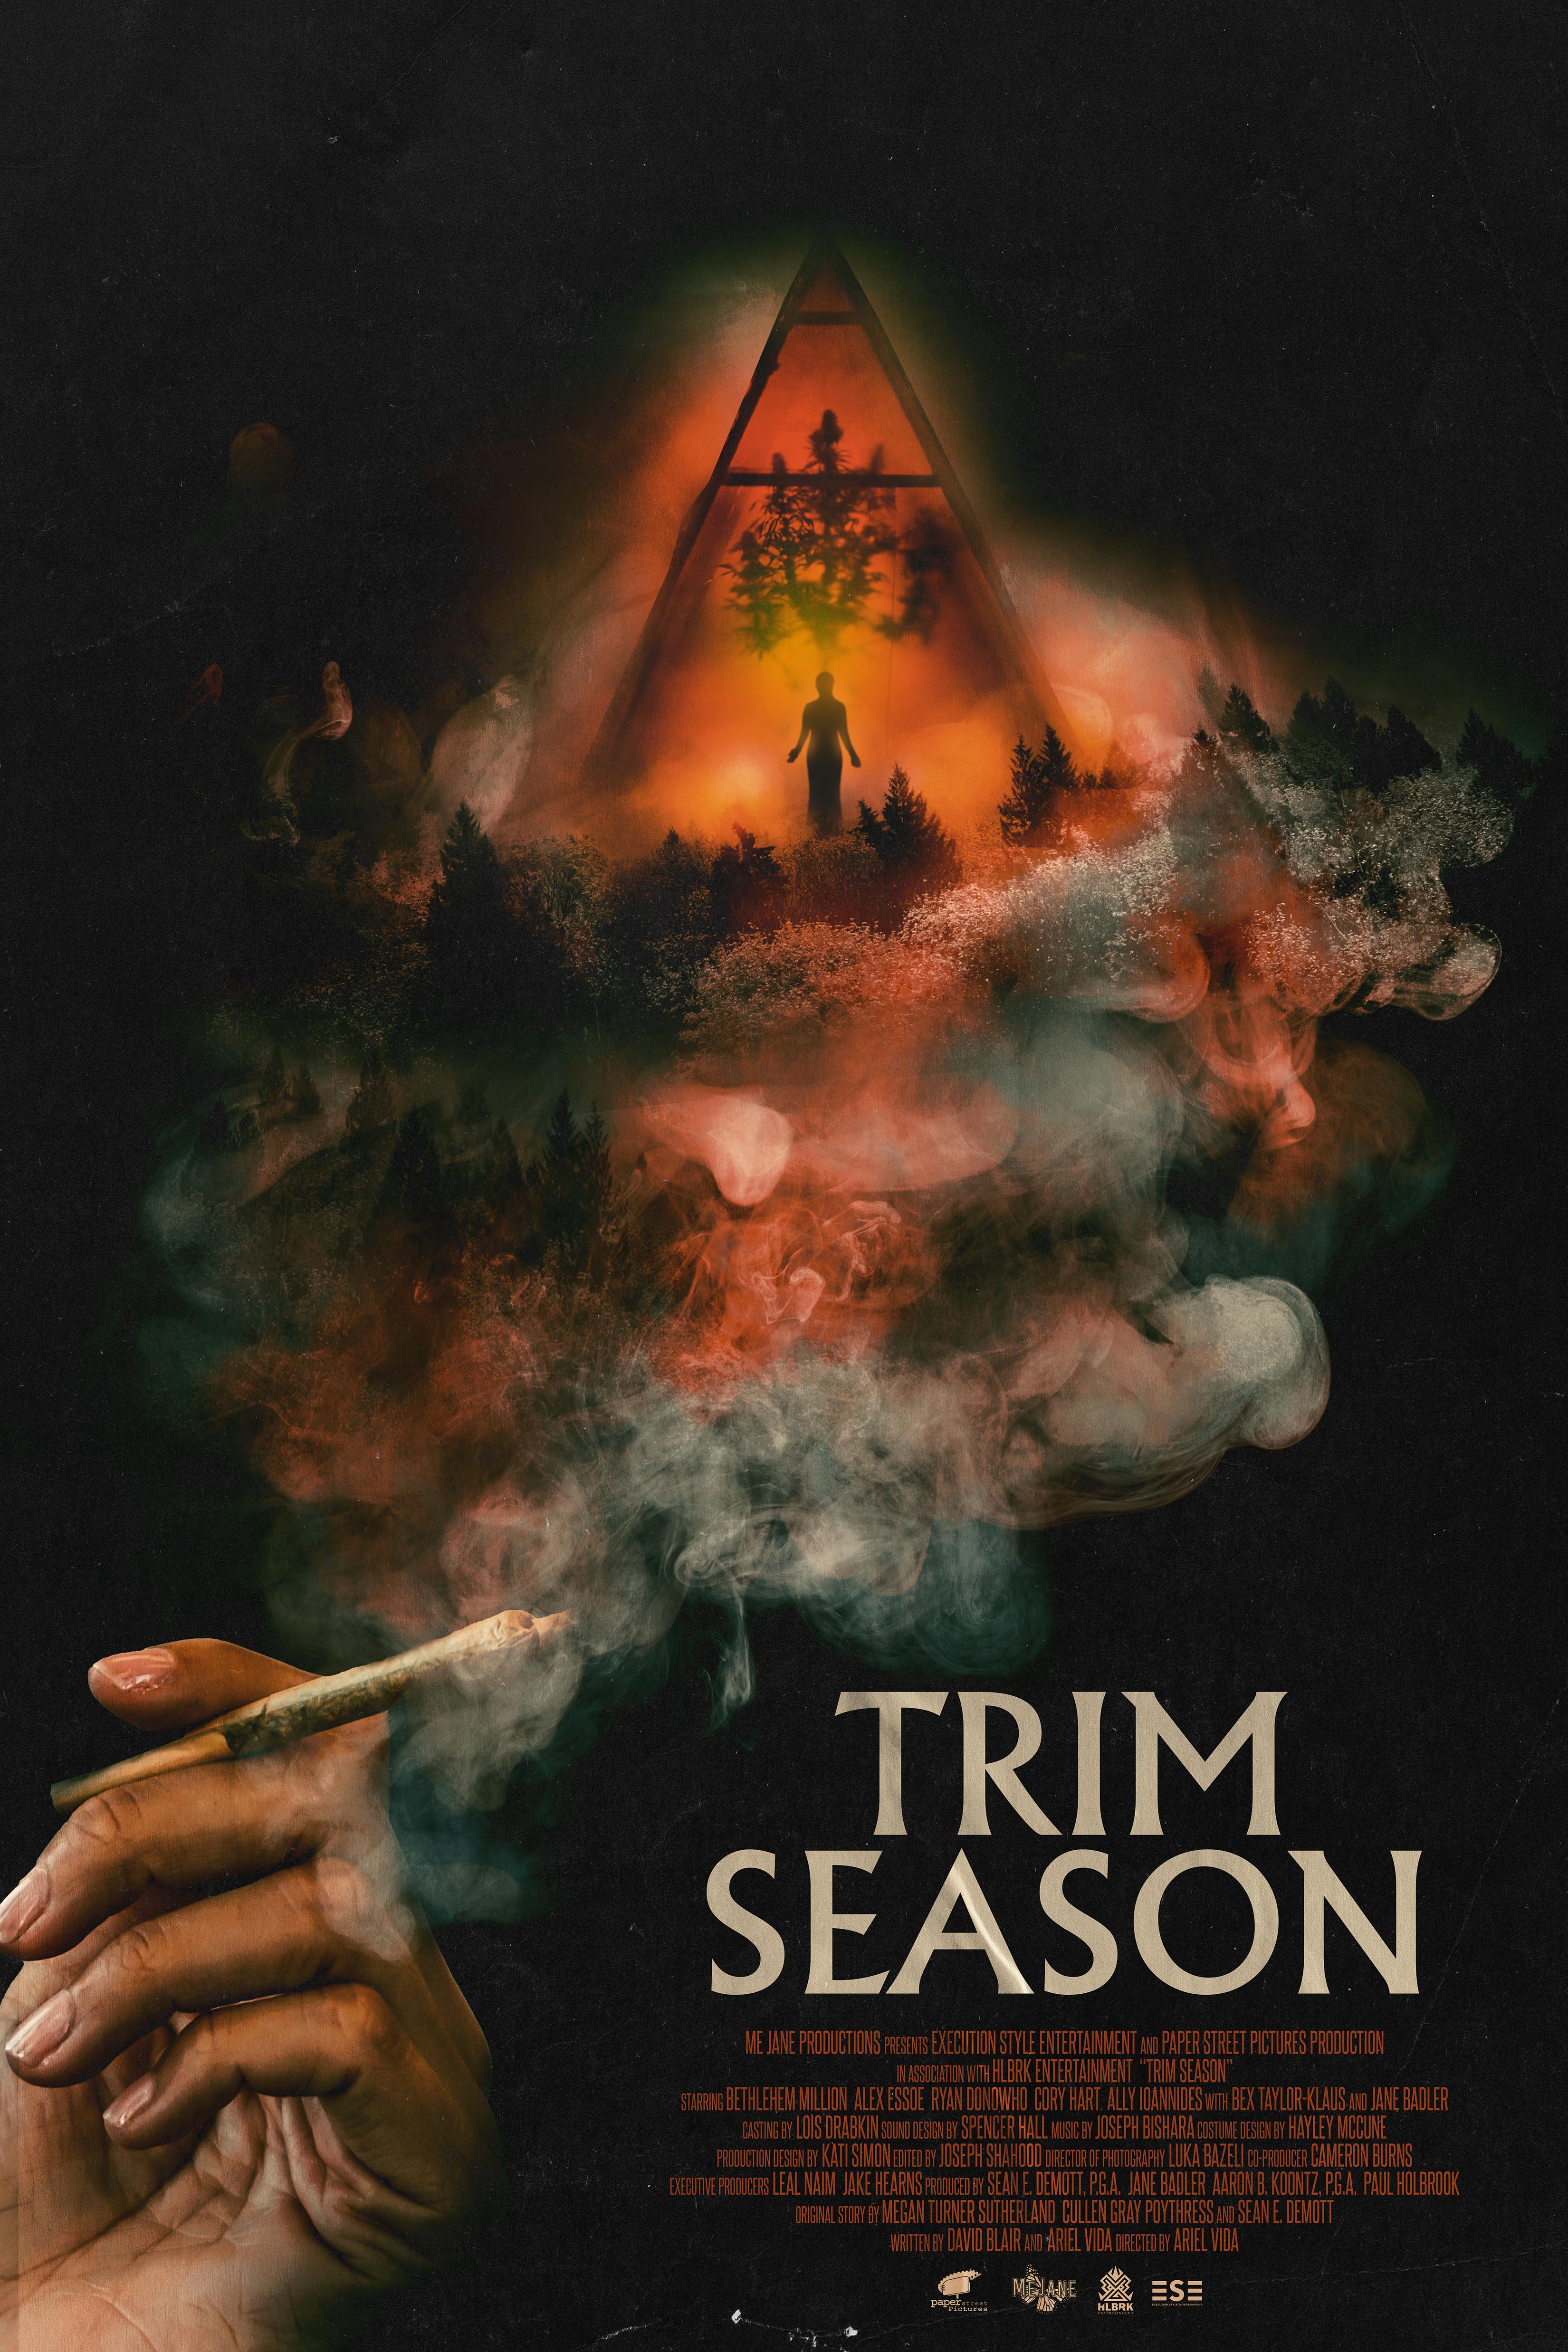 Trim Season Film Horor Barat, Berikut Sinopsisnya!